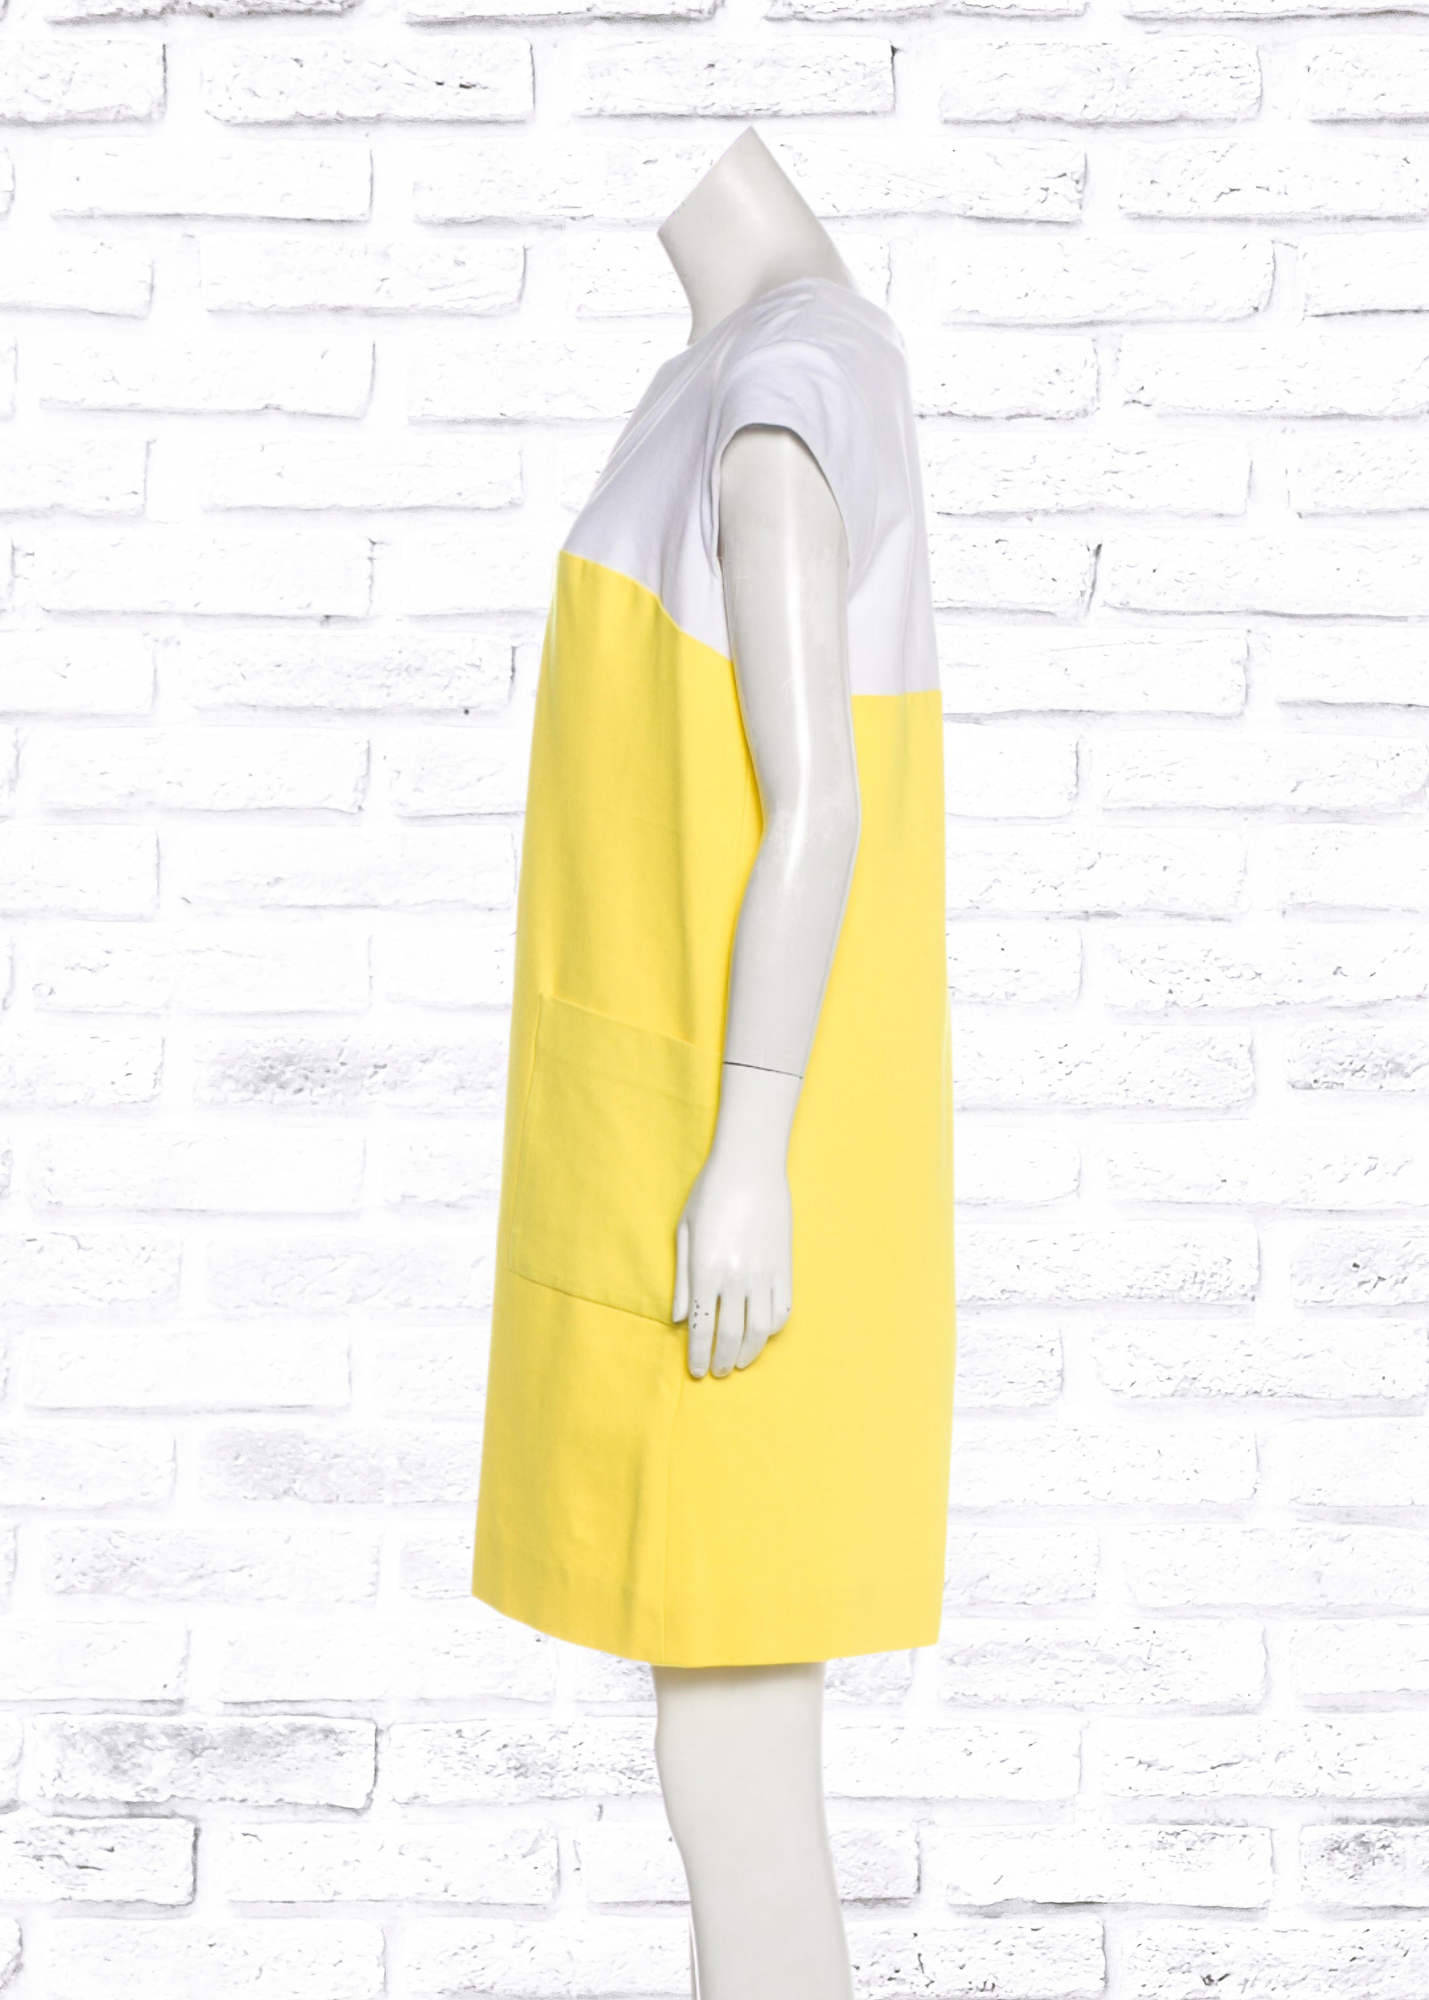 Kate Spade New York 'Hana' Yellow/White Mod-Style Shift Dress